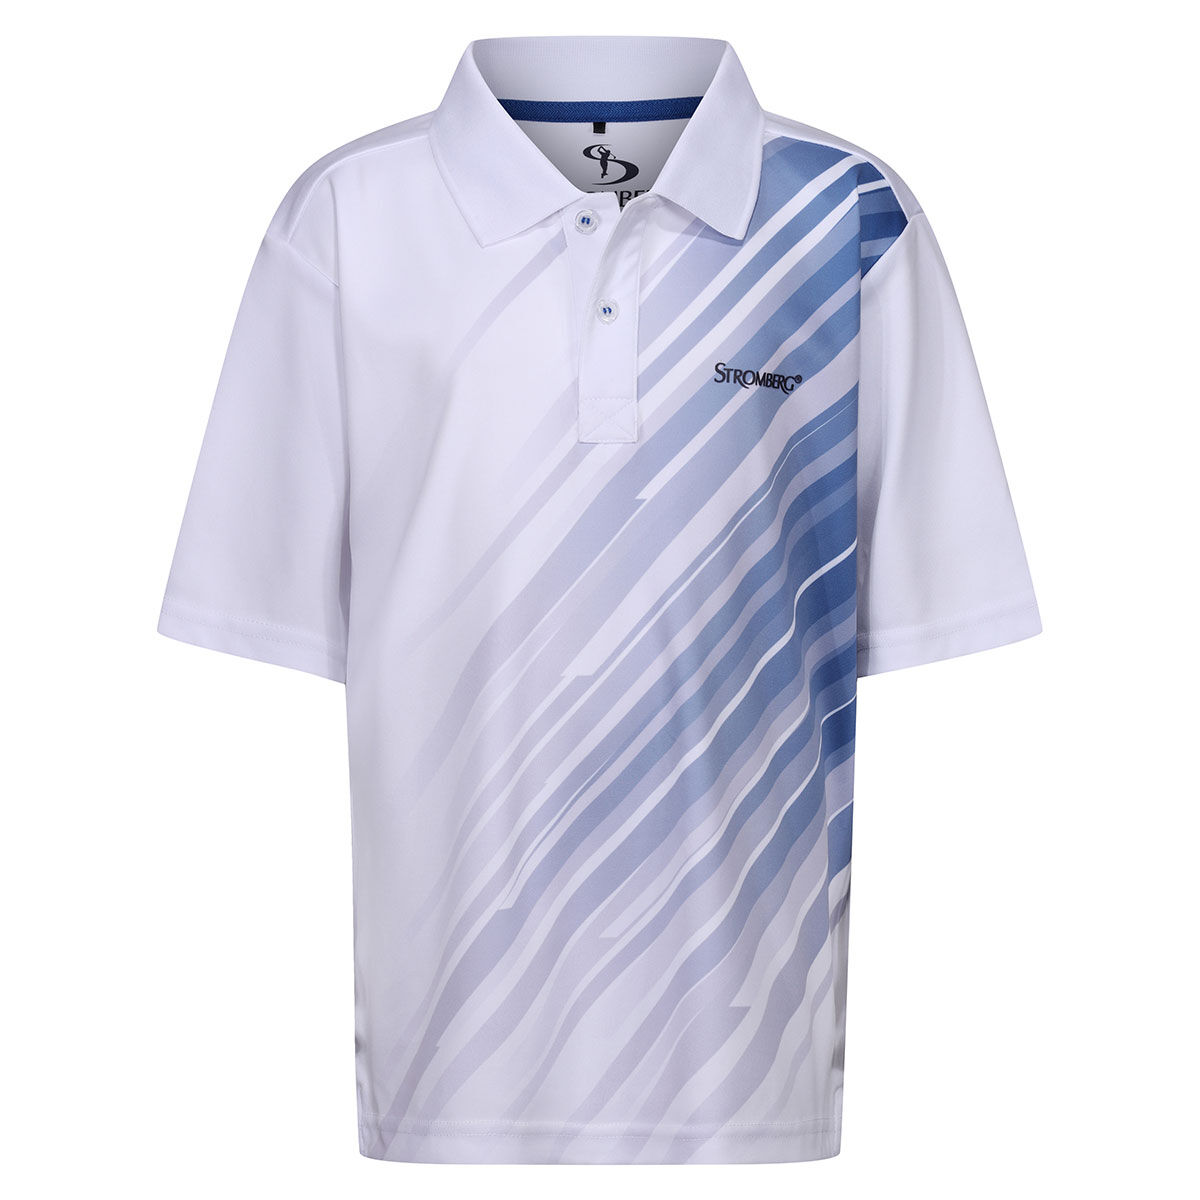 Stromberg Junior Fade Stretch Golf Polo Shirt, Unisex, White/true blue, 13-14 years | American Golf